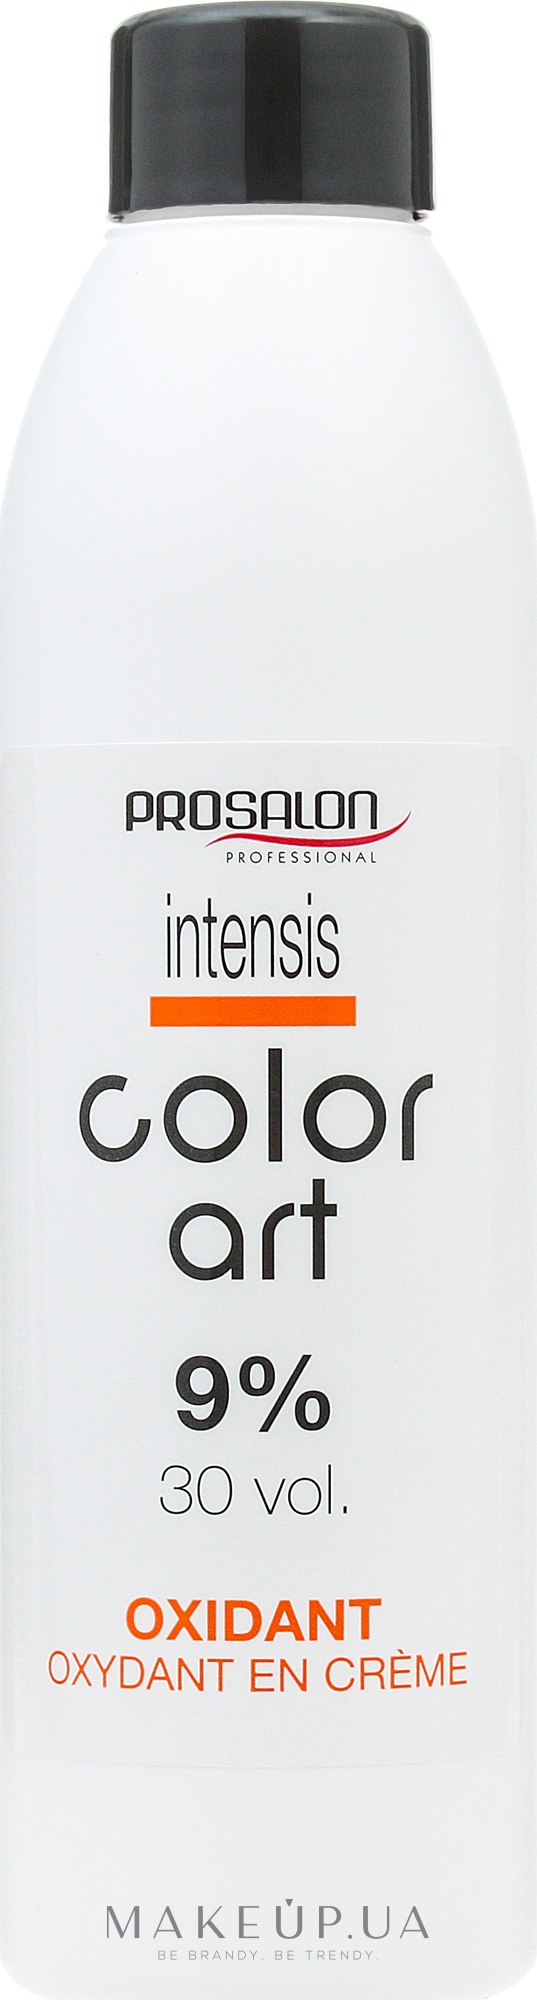 Оксидант 9% - Prosalon Intensis Color Art Oxydant vol 30 — фото 150ml